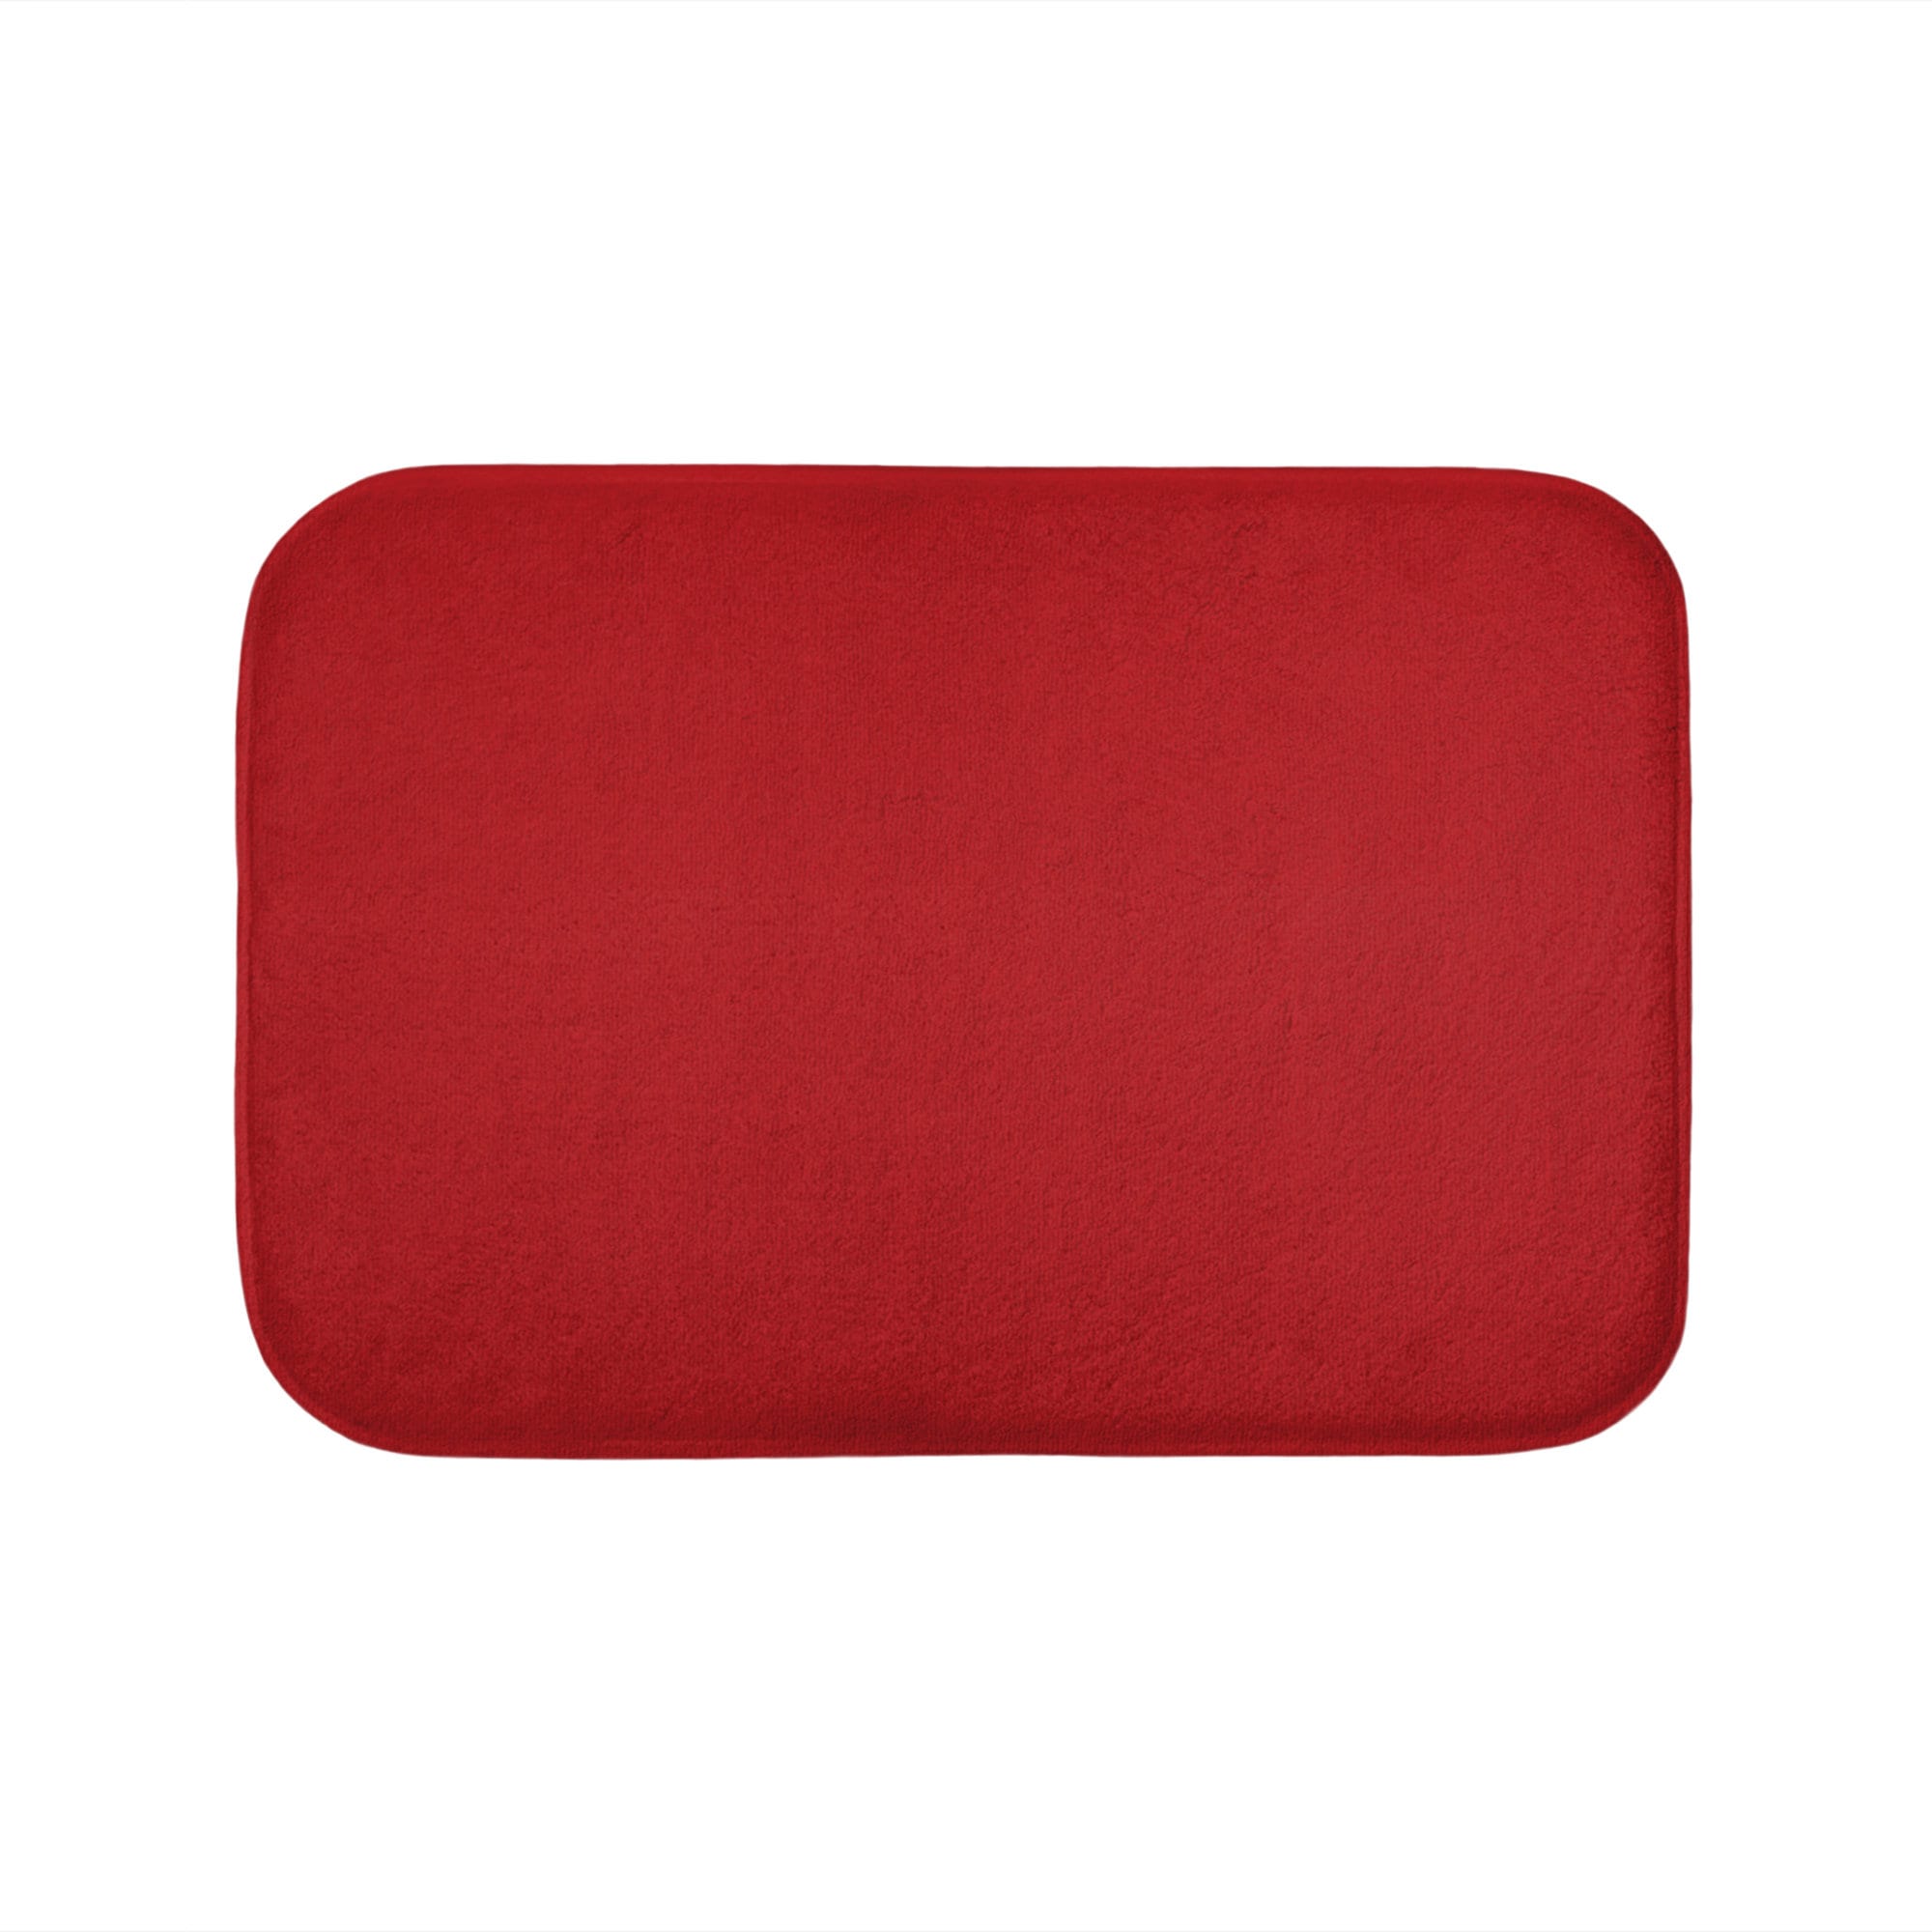 Red Barrel Studio® Dobrinka 100% Cotton Bath Rug with Non-Slip